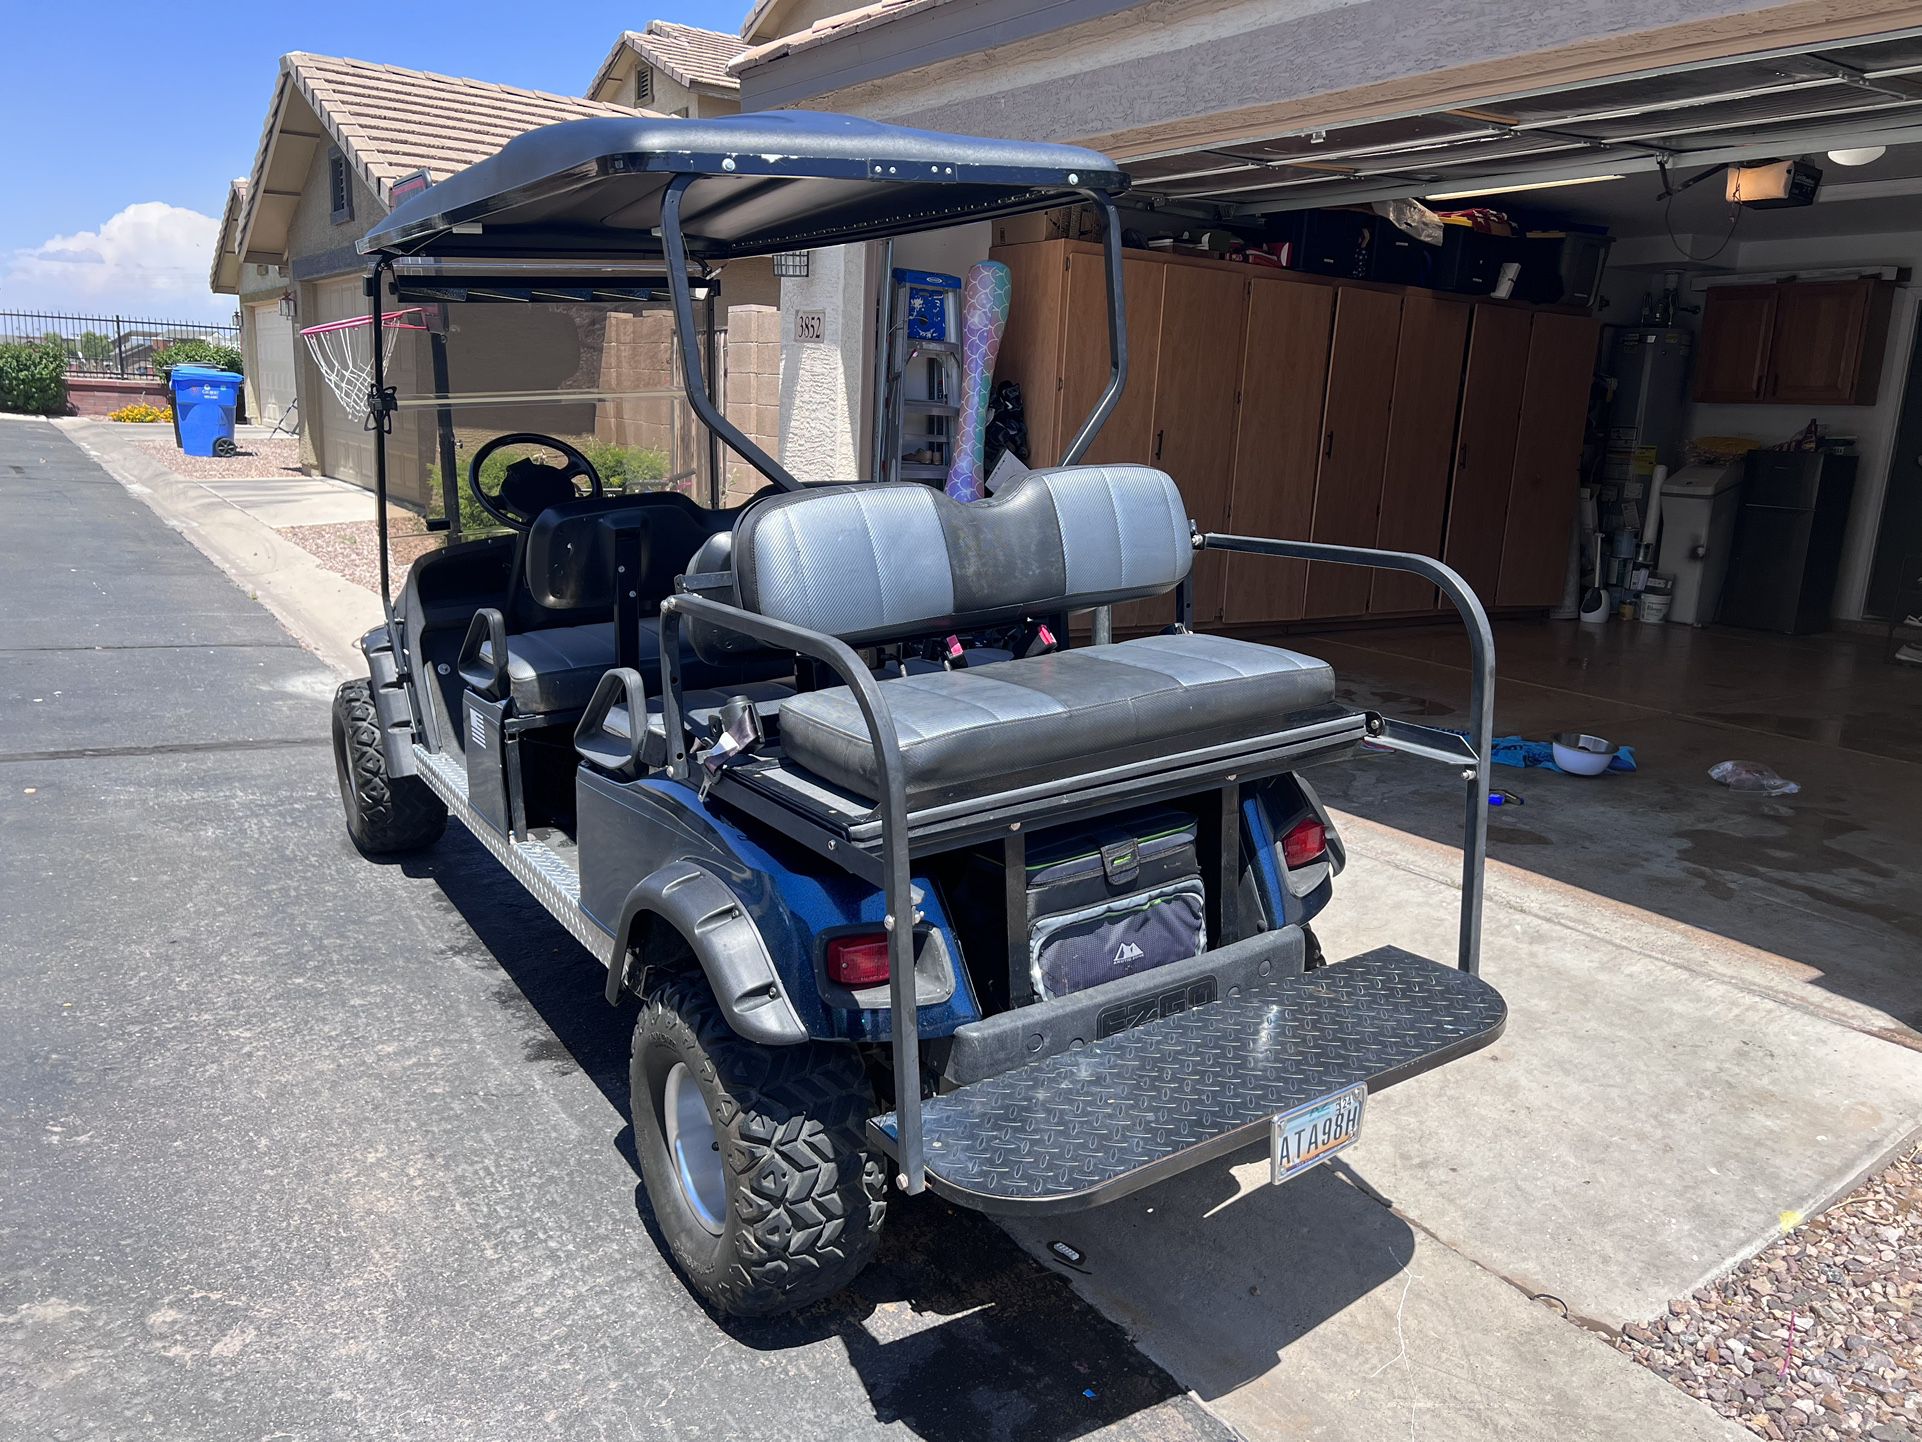 6-8 Seat Golf Cart